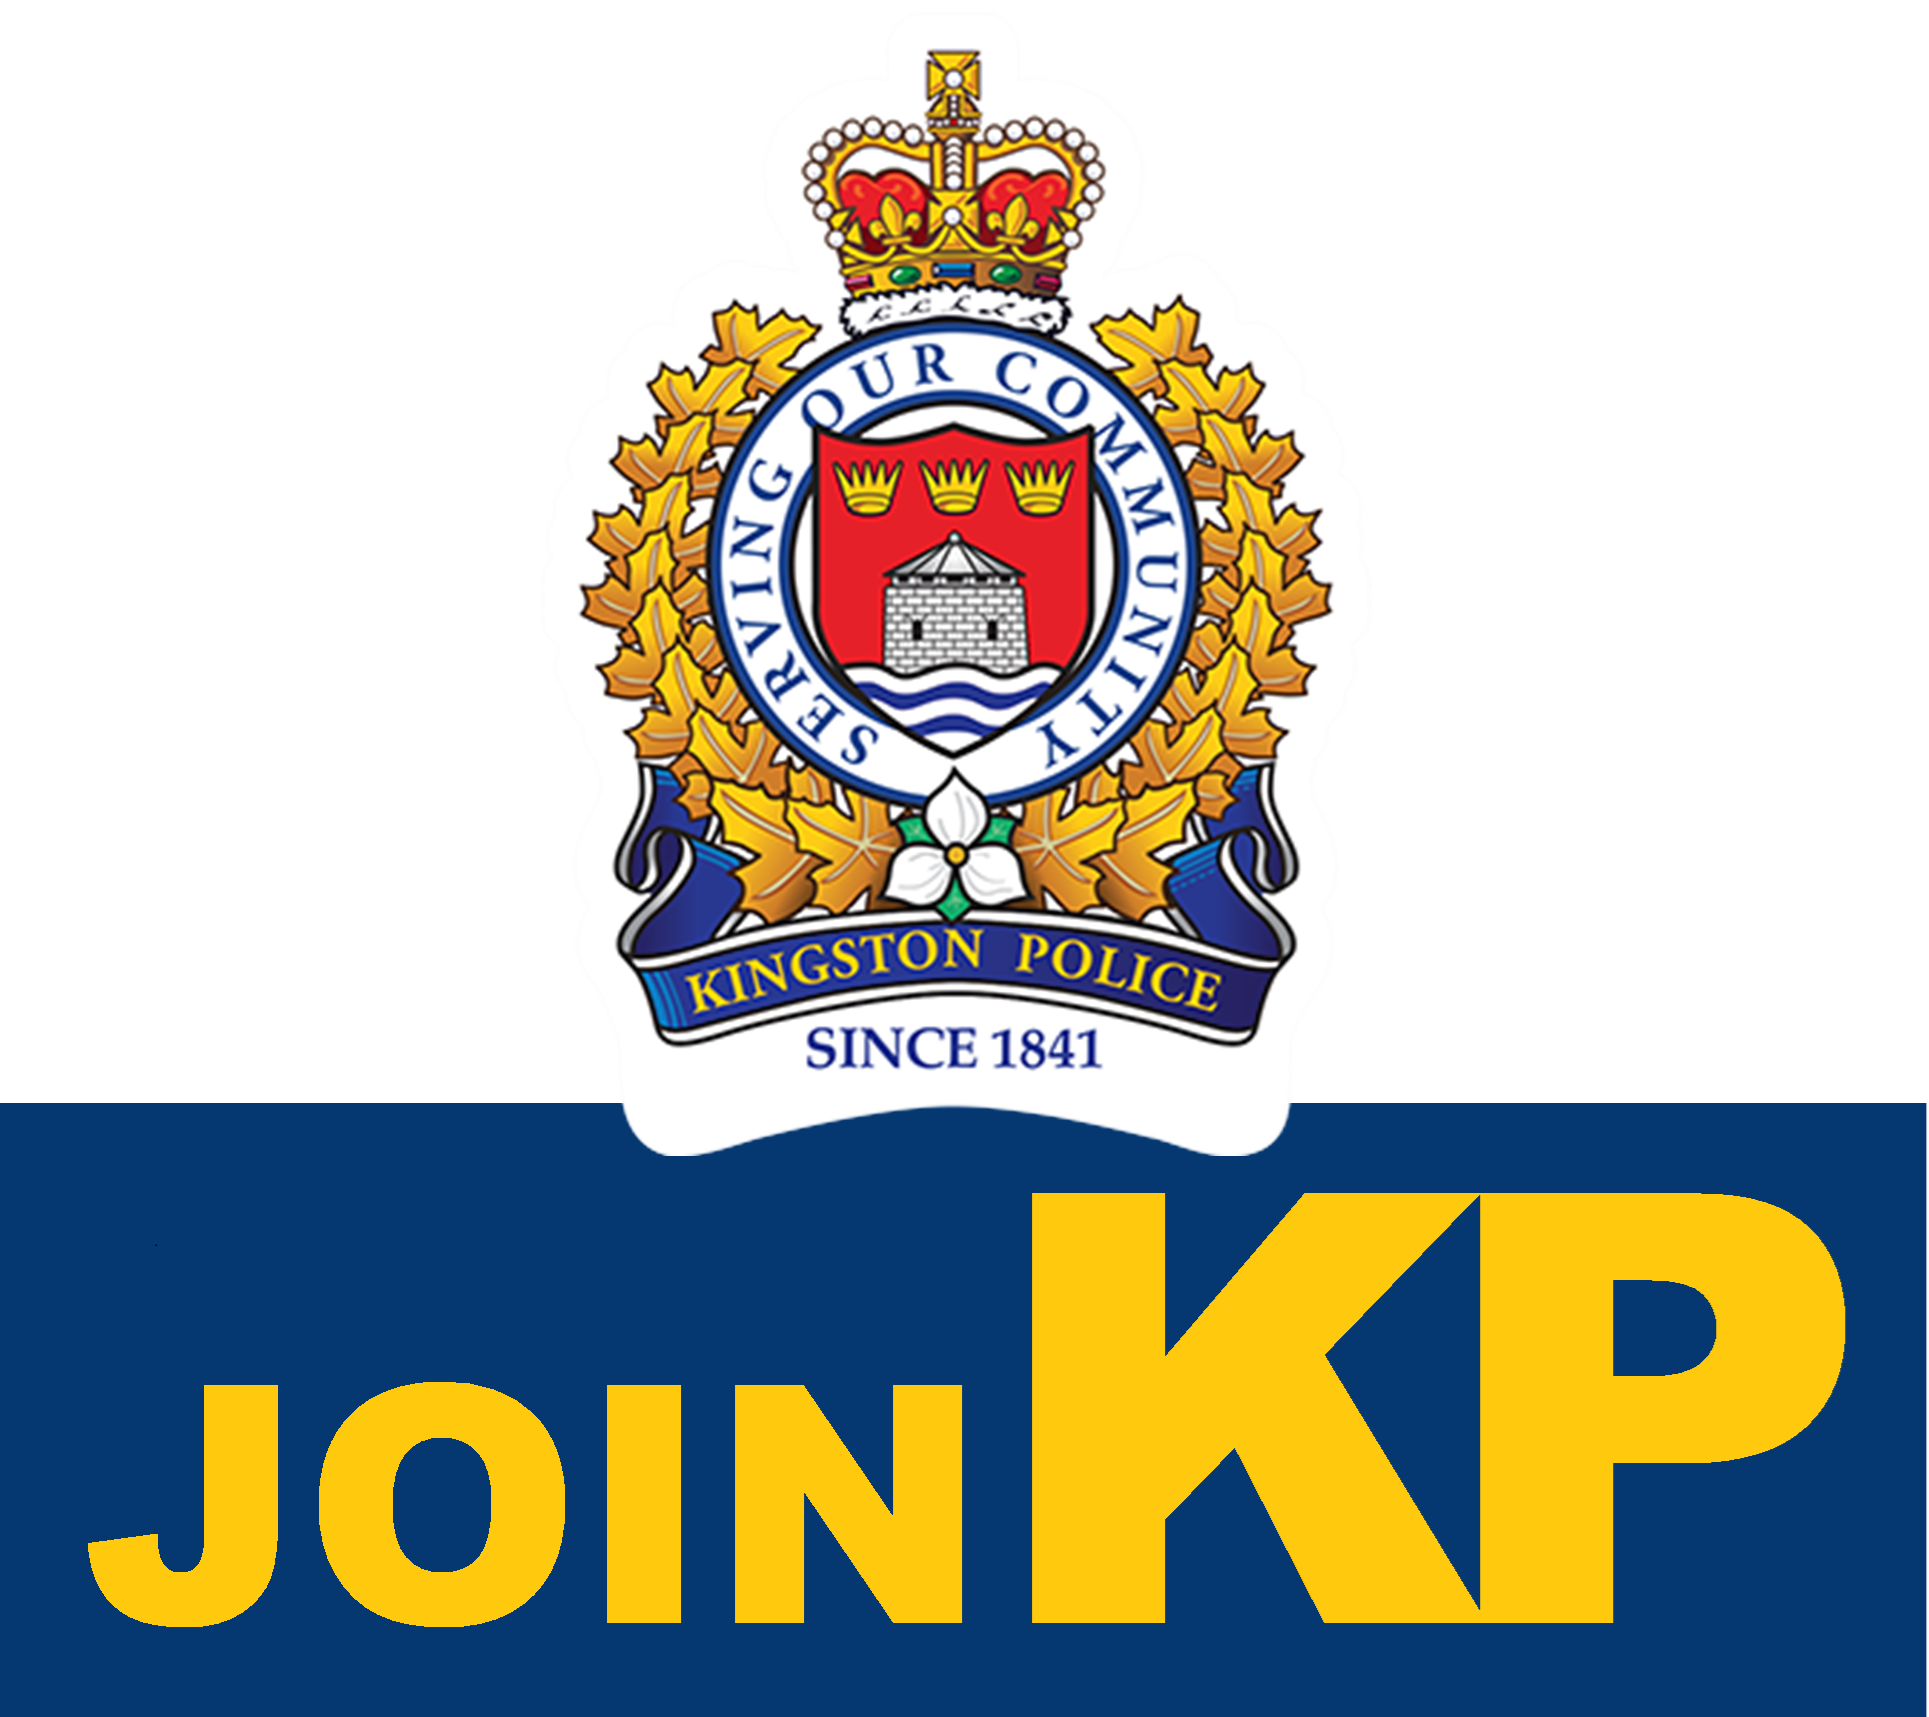 Join KP logo